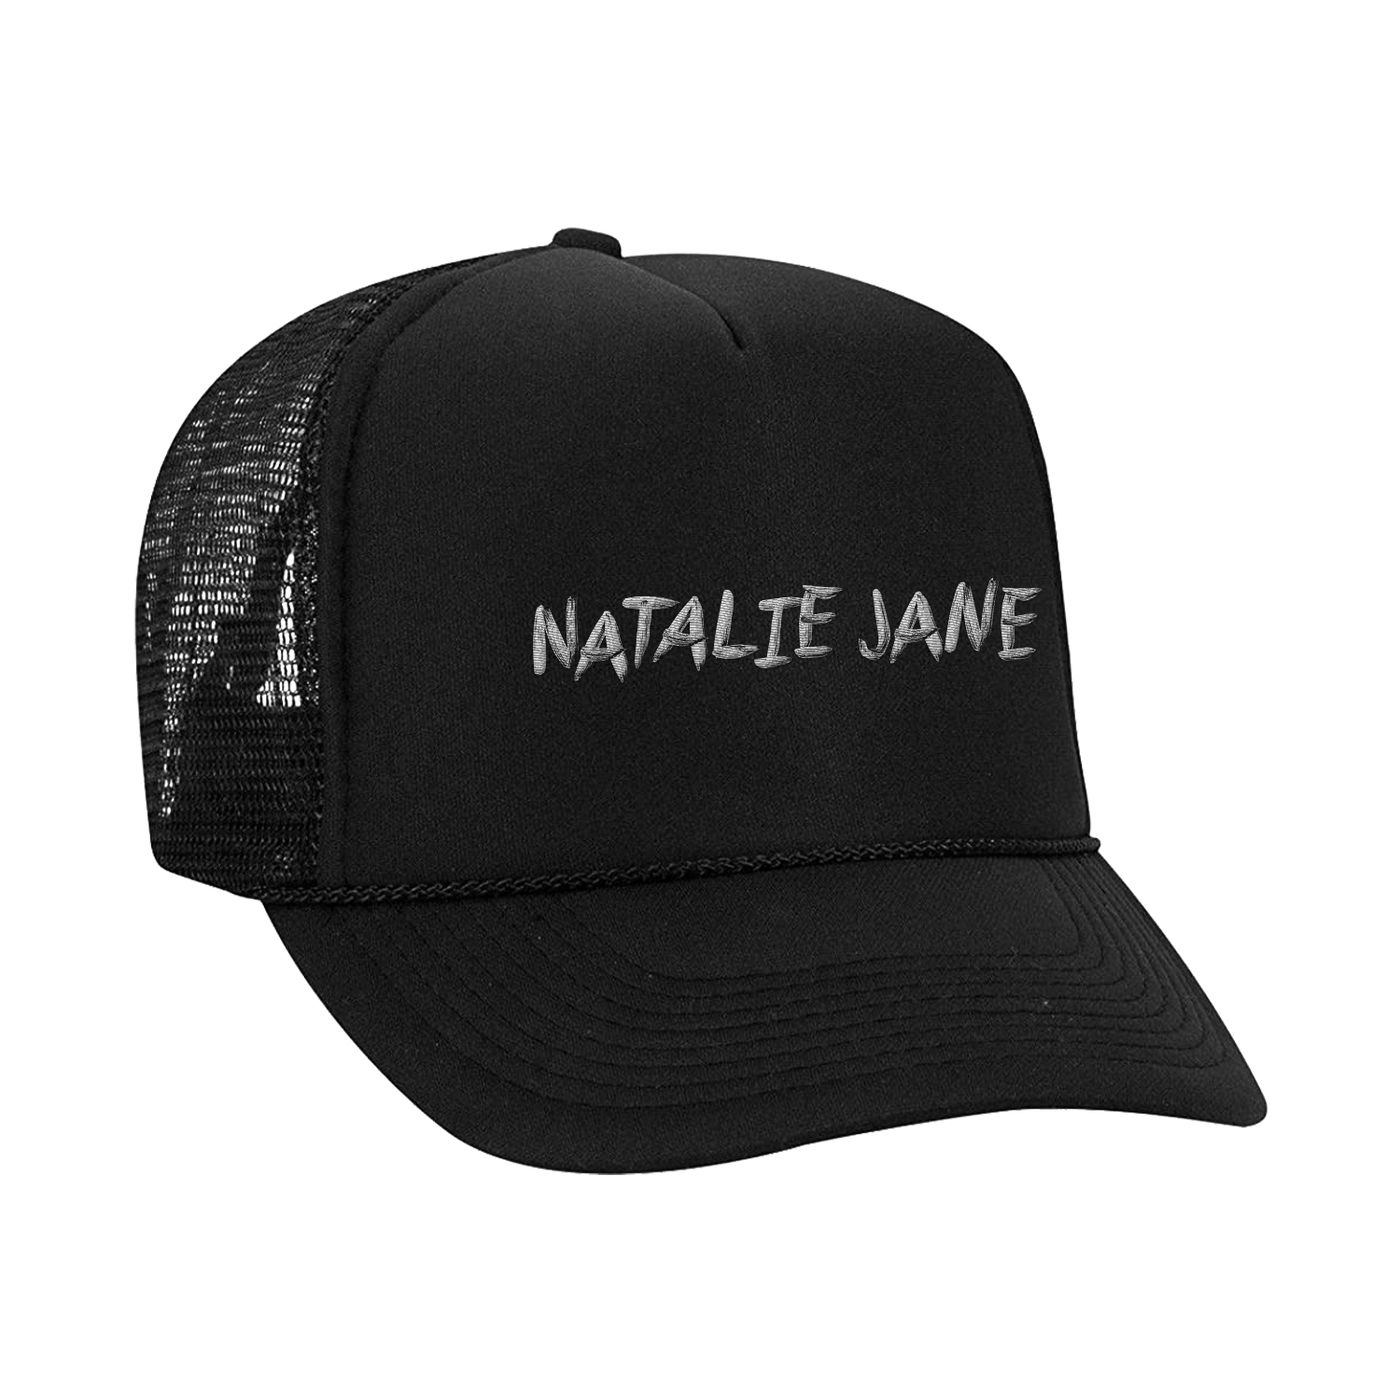 Natalie Jane Trucker Cap